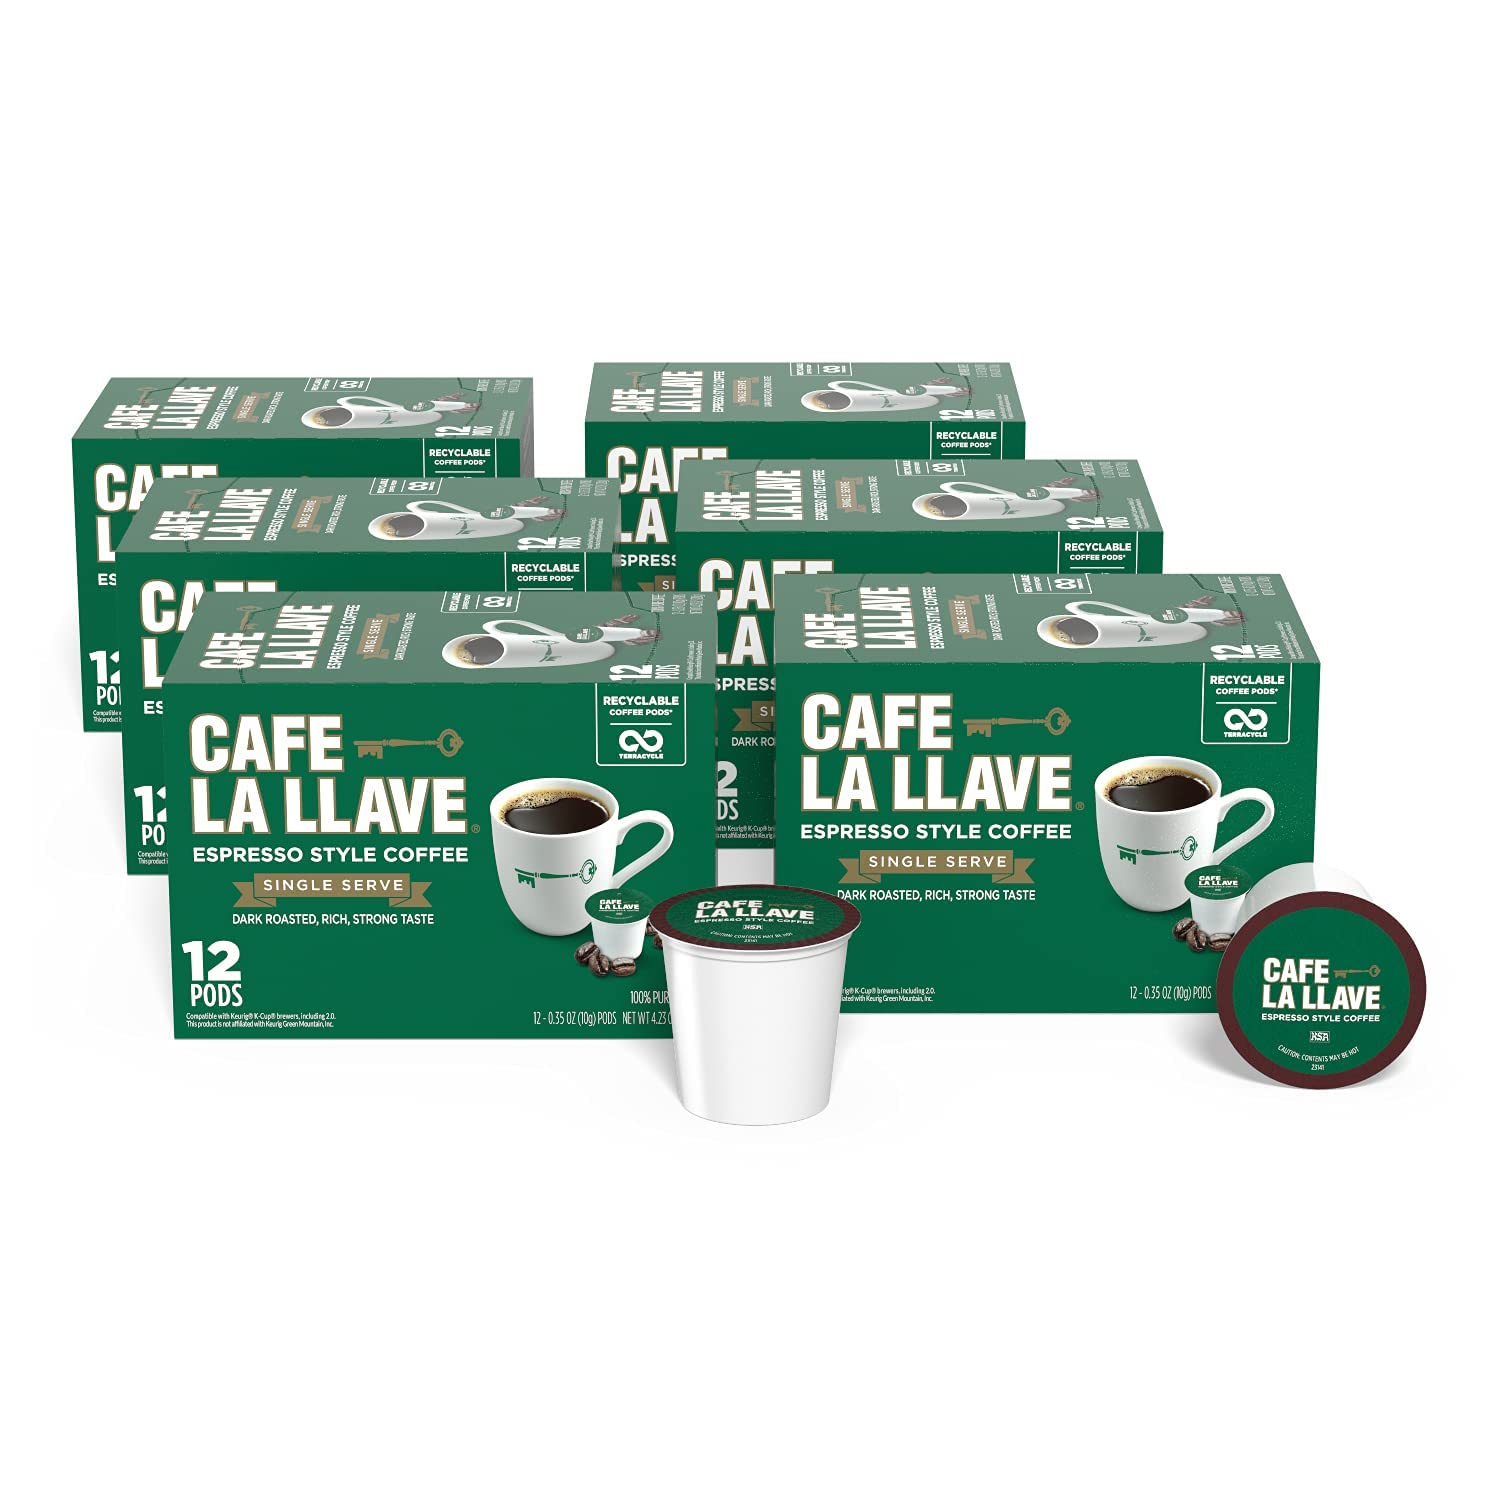 Cafe La Llave (72 ct.) Espresso-Style Single Serve Coffee pods